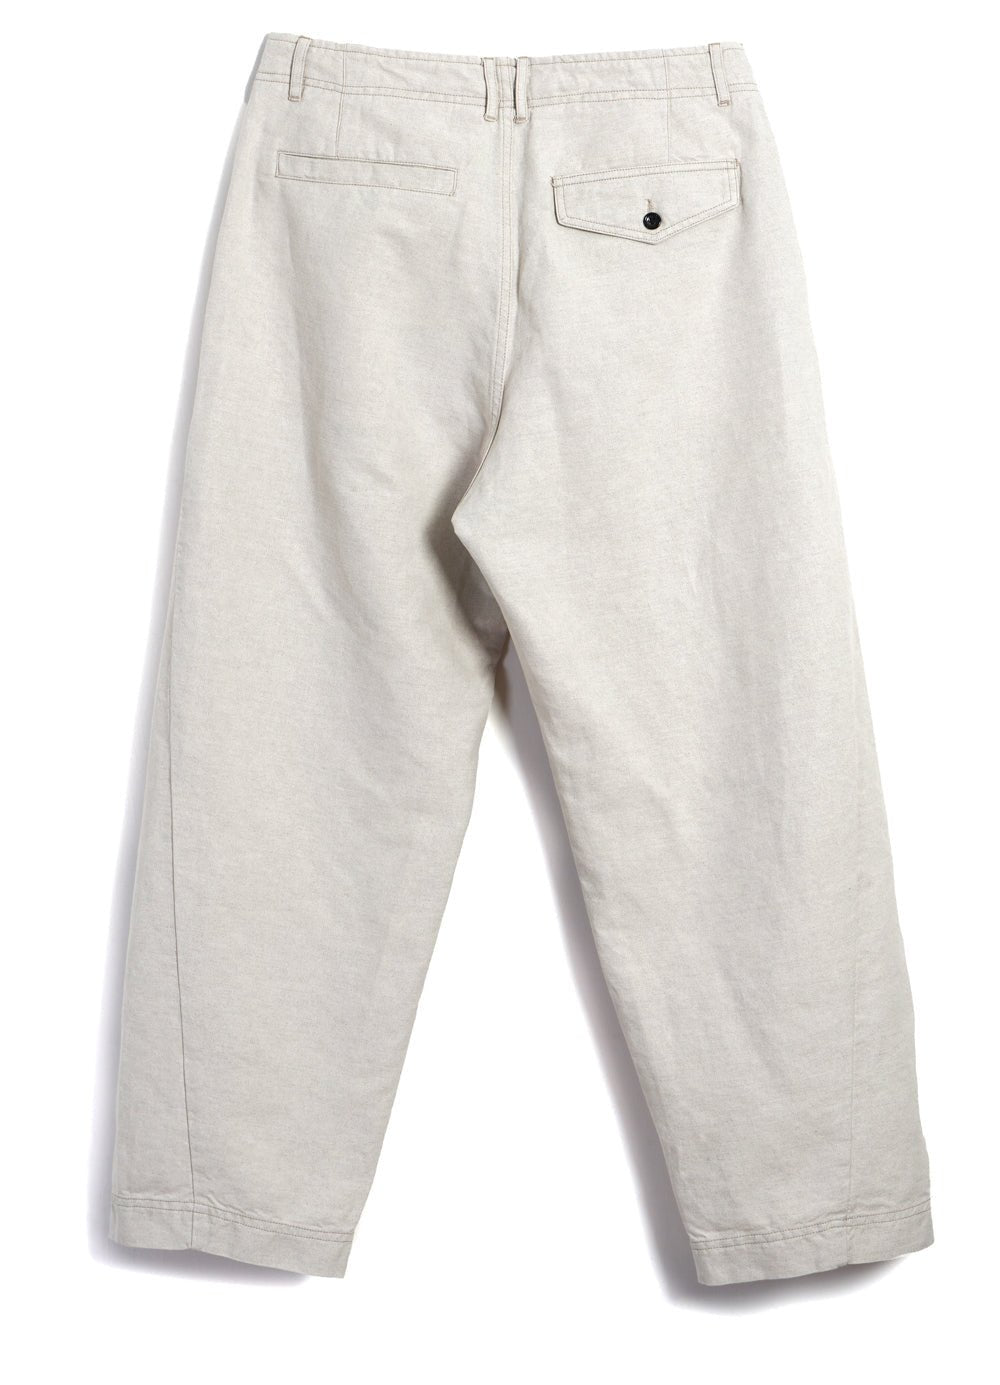 HANSEN GARMENTS - BOBBY | Super Wide Pleated Trousers | Flax Nature - HANSEN Garments